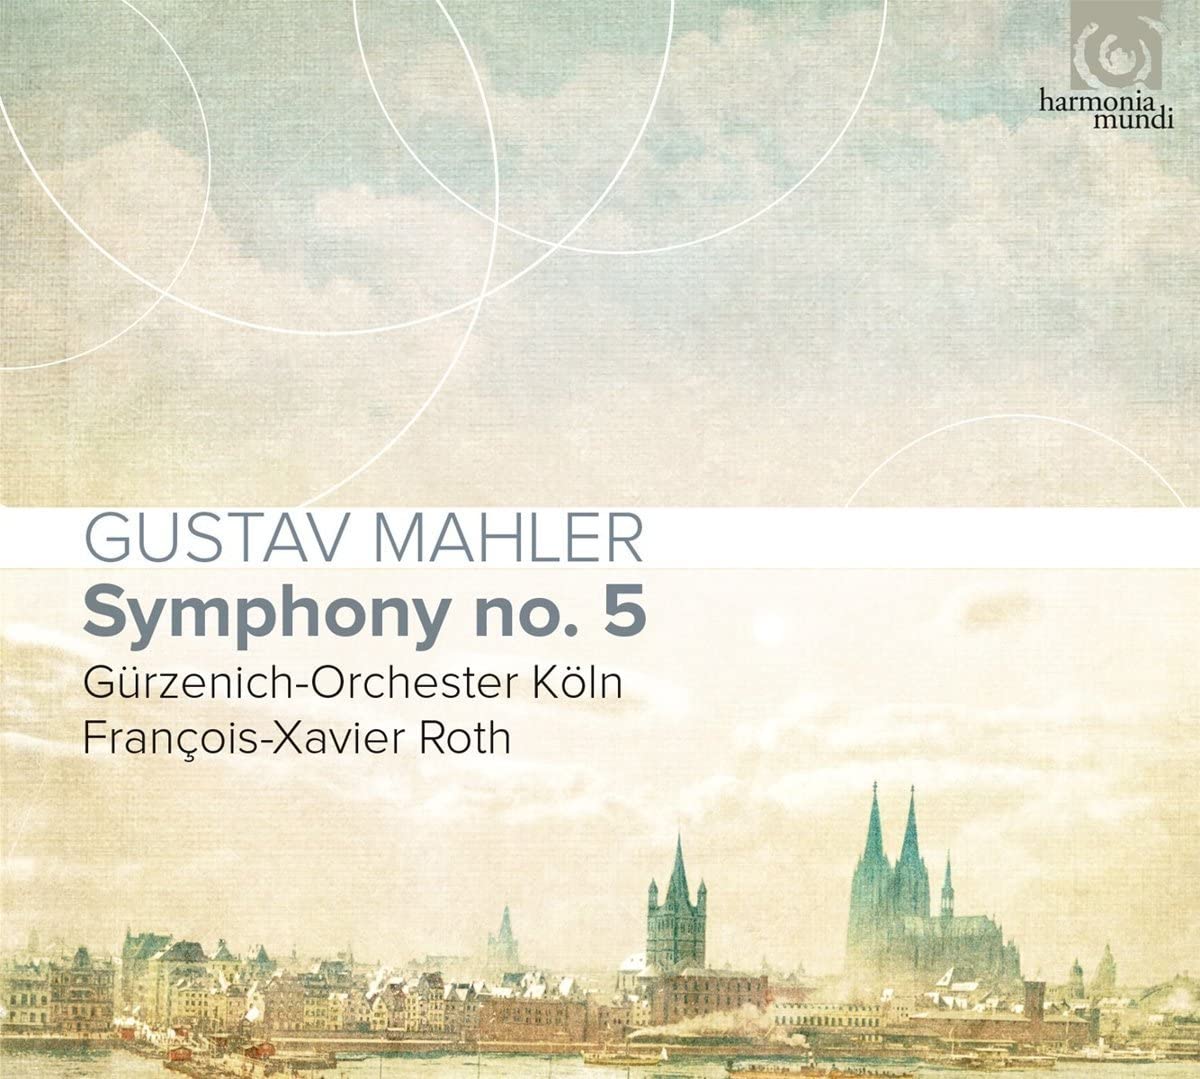 Gustav Mahler: Symphony No. 5 | Gurzenich-Orchester Kolner Philharmoniker, Francois-Xavier Roth